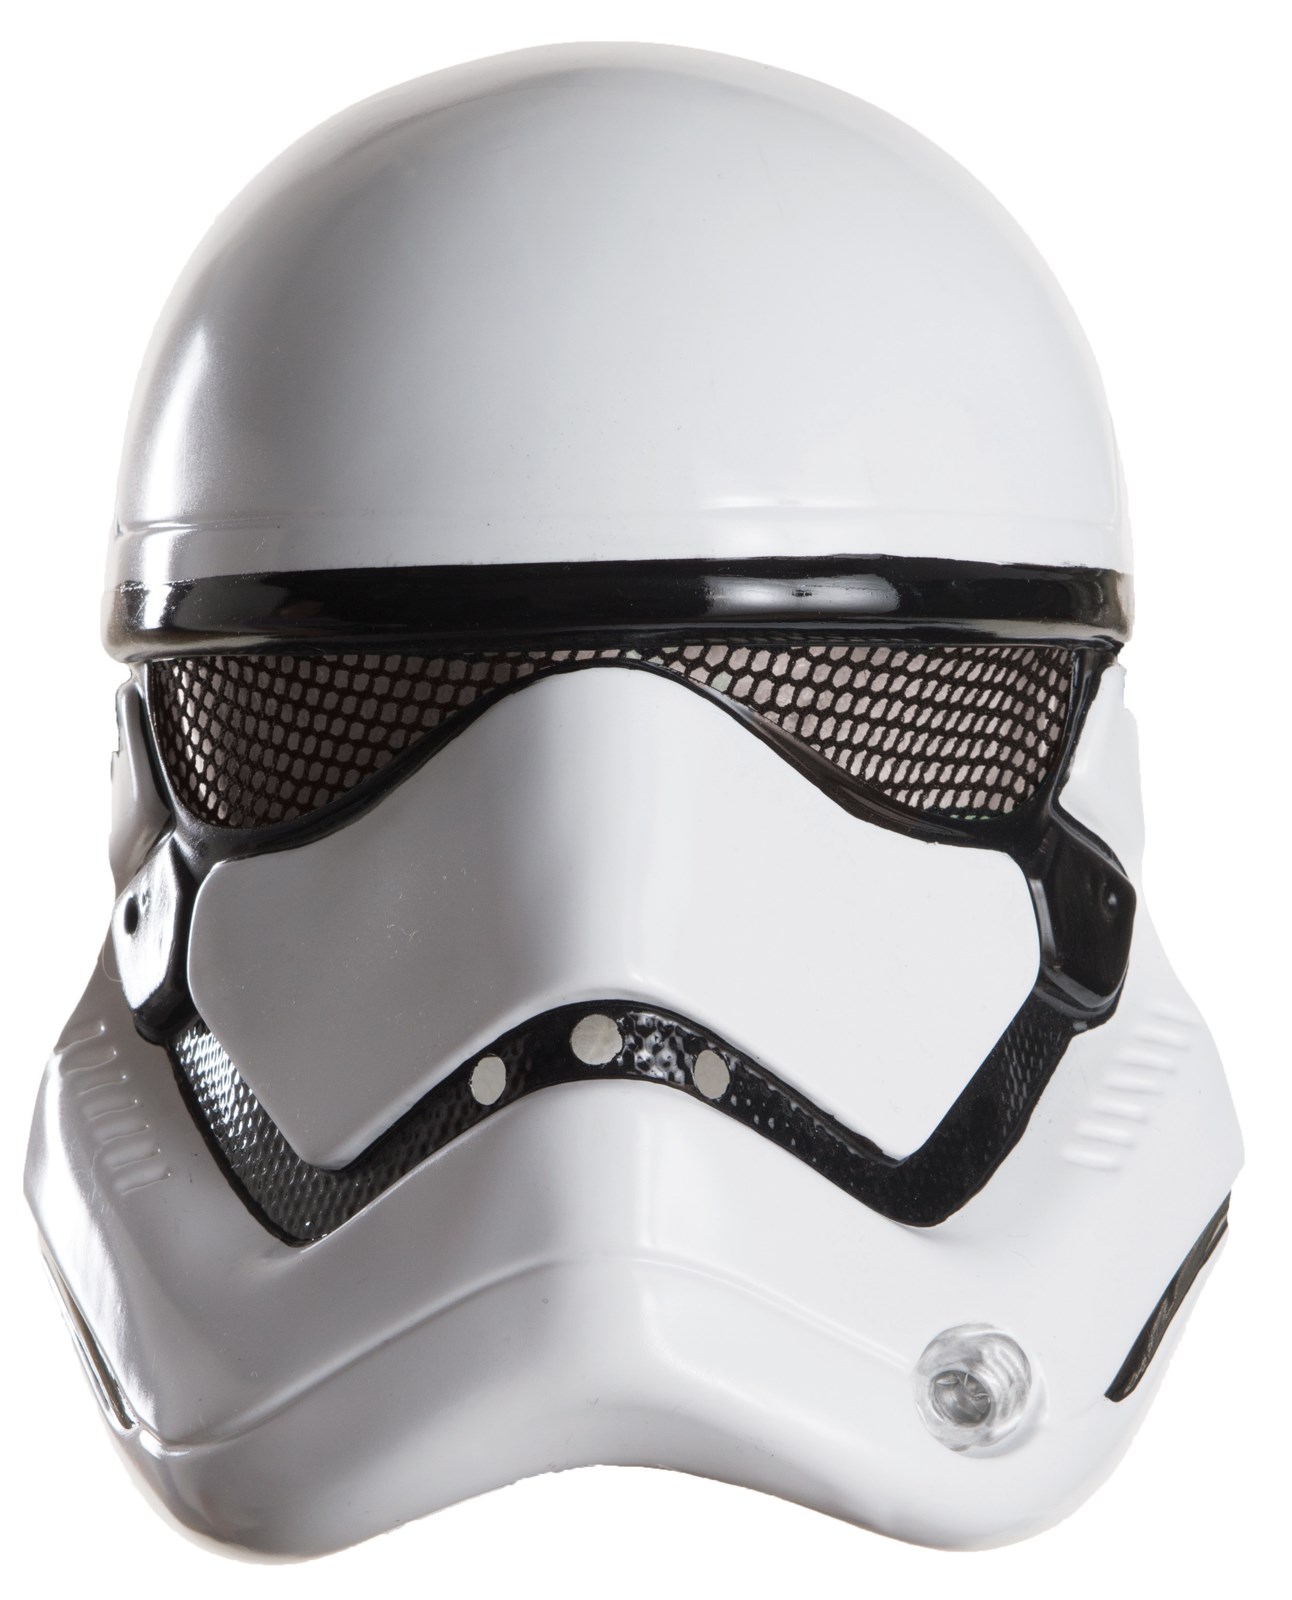 Star Wars:  The Force Awakens – Boys Stormtrooper Half Helmet